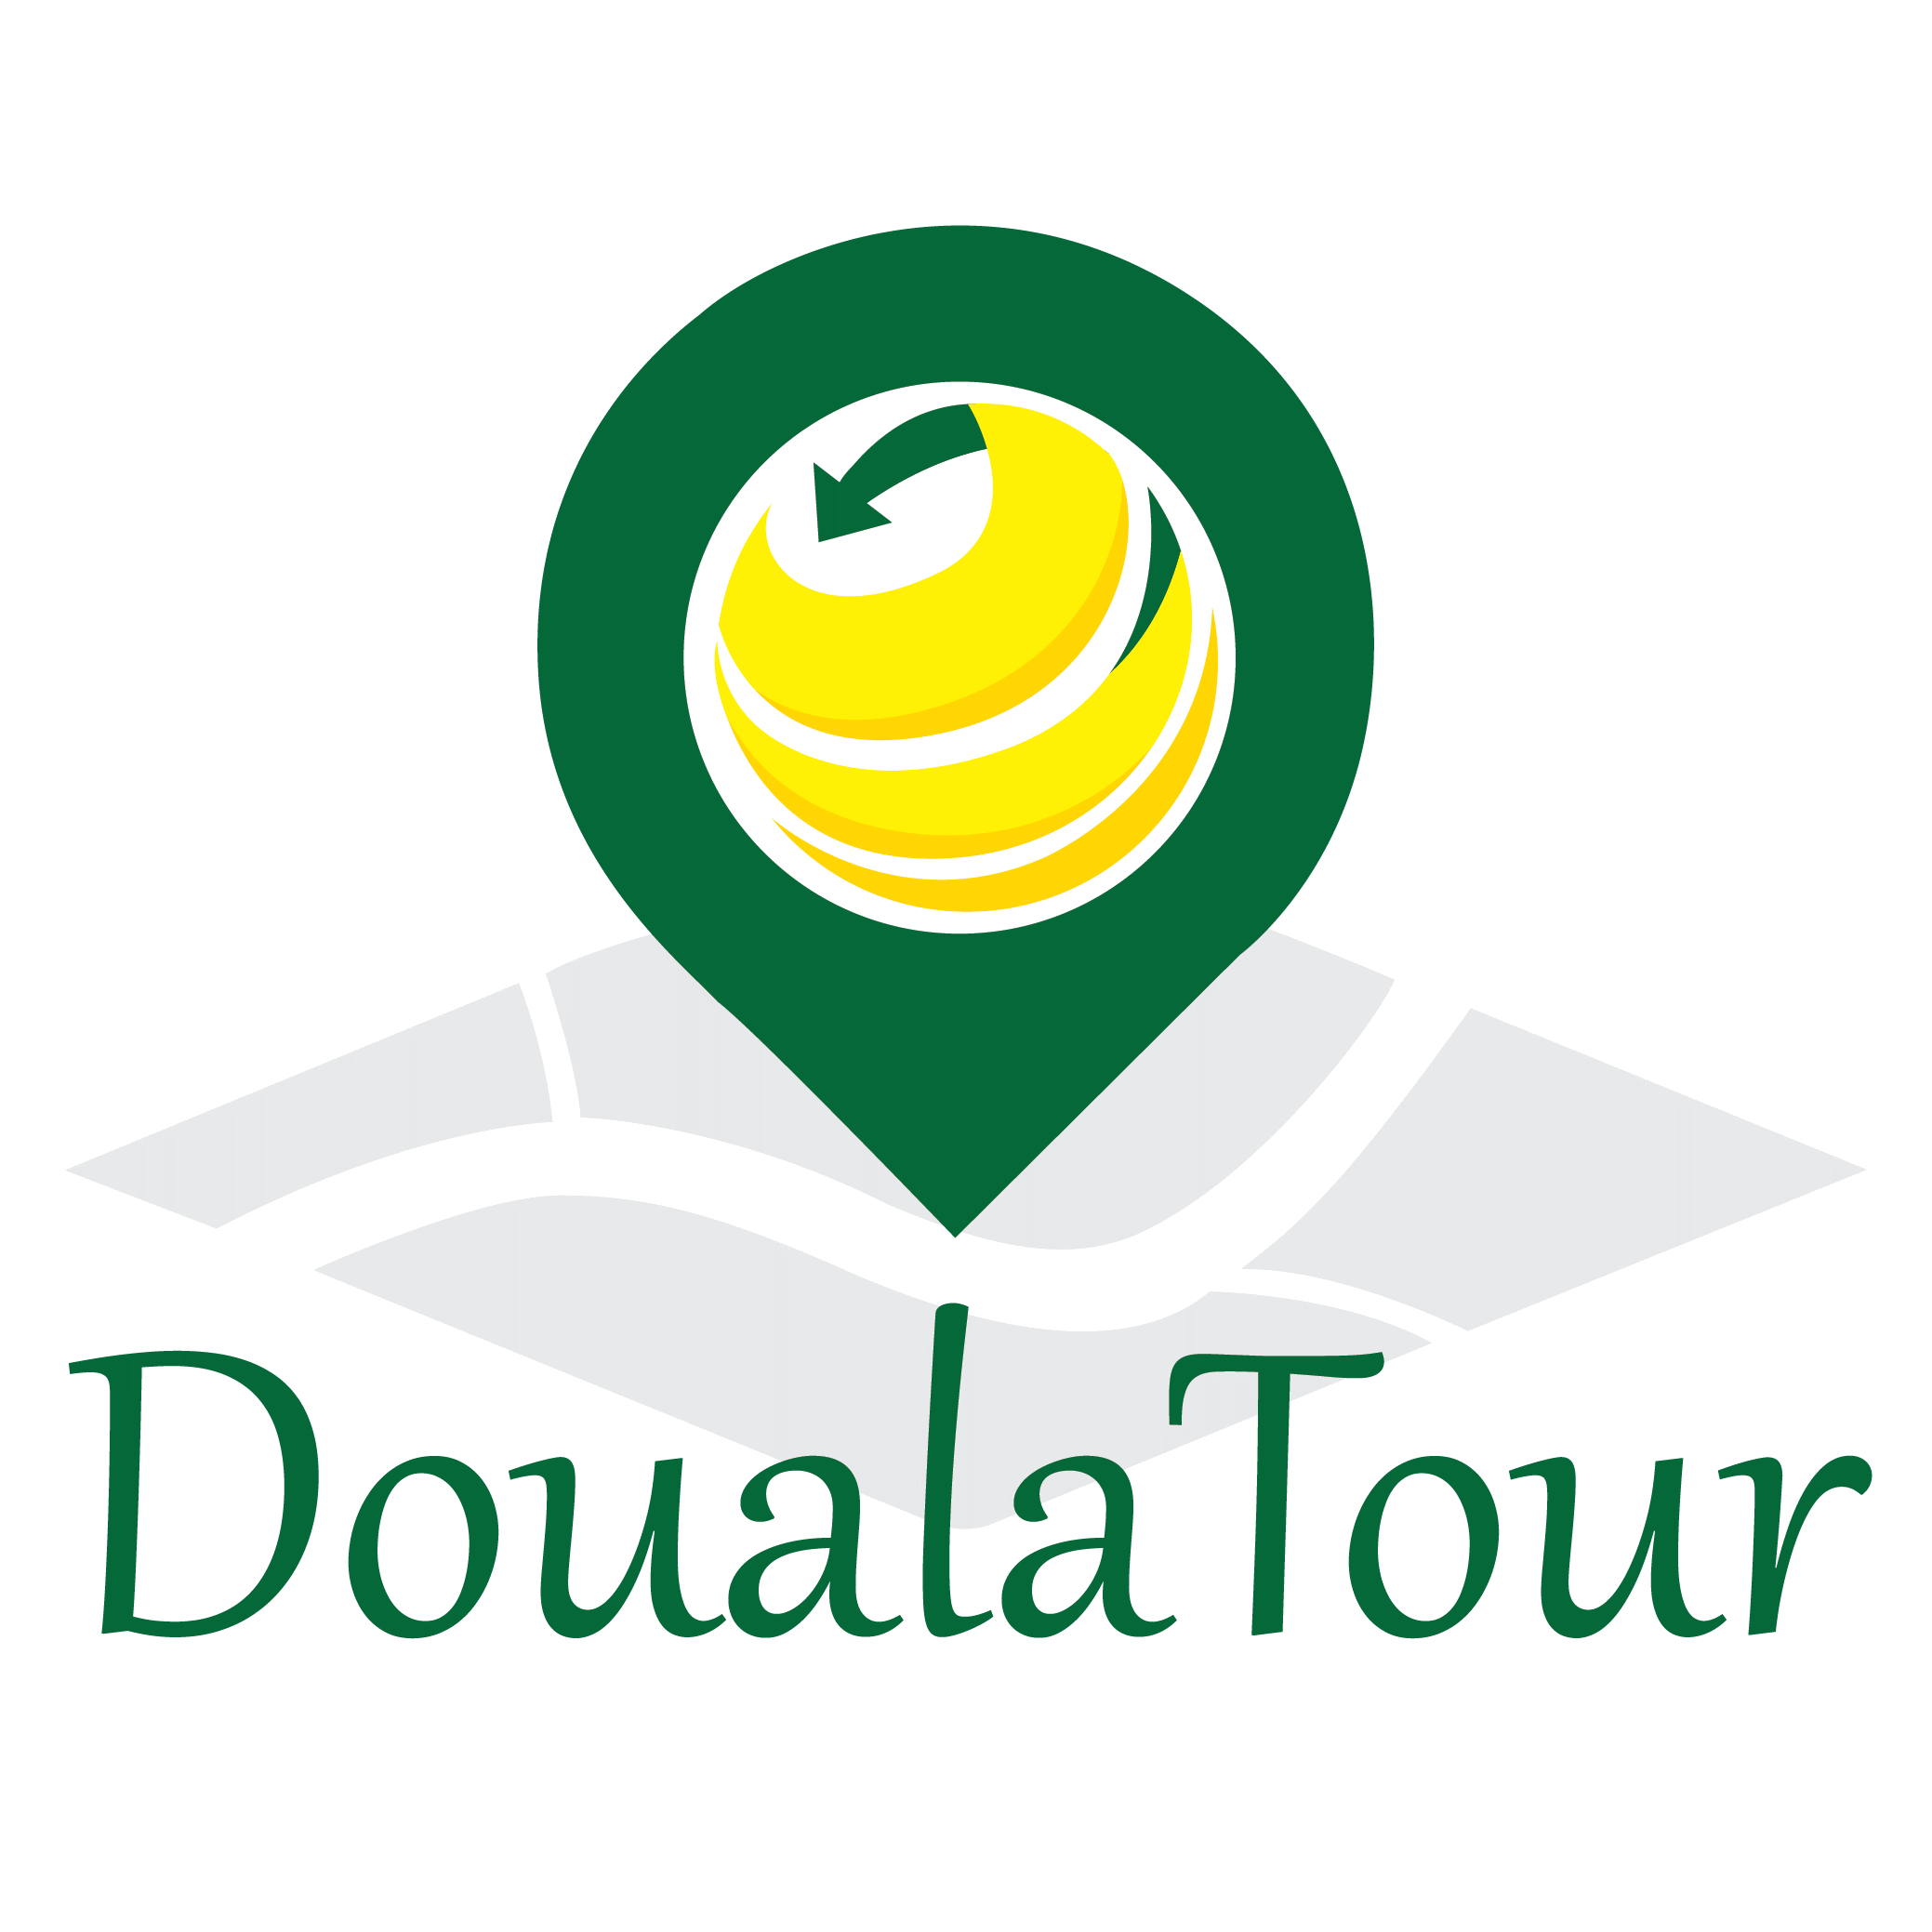 logo DoualaTour